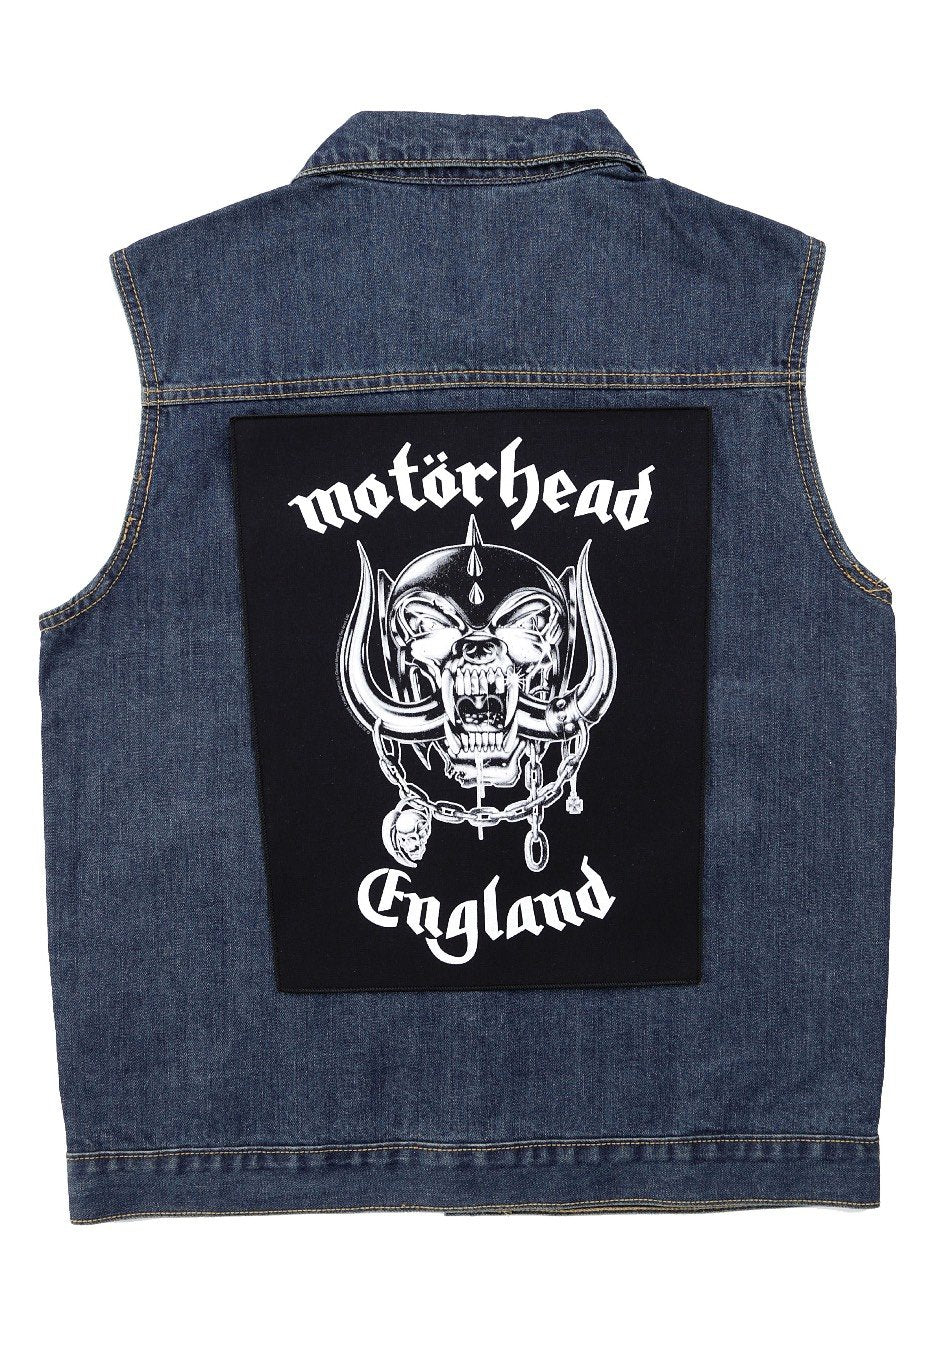 Motörhead - England - Backpatch